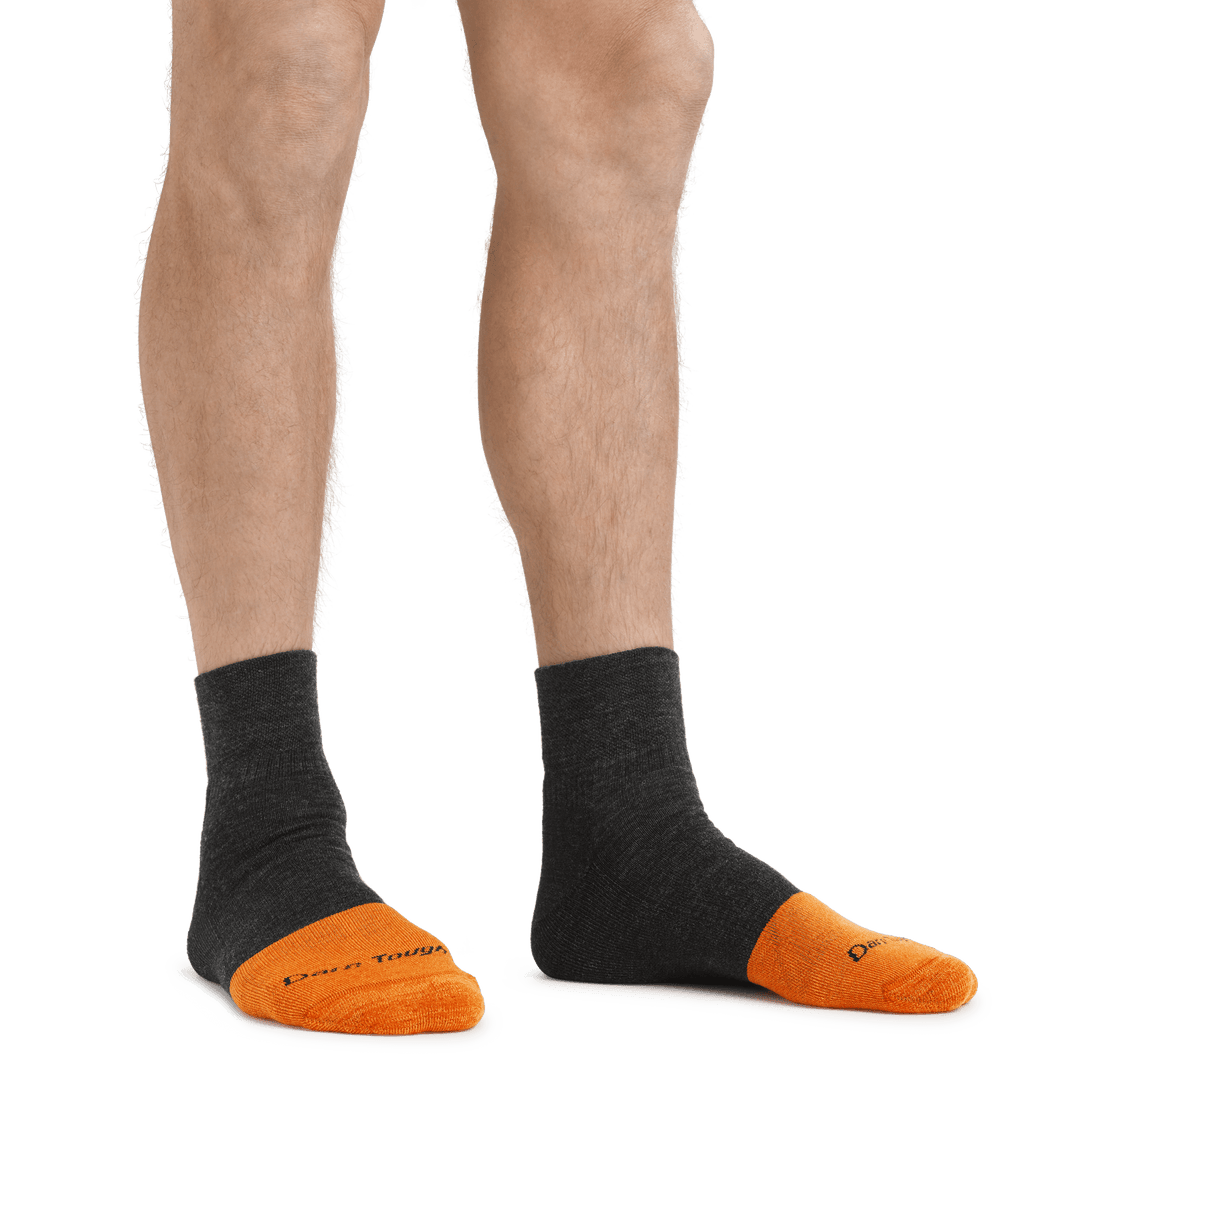 Darn Tough Mens Steely Quarter Midweight Work Socks  - 